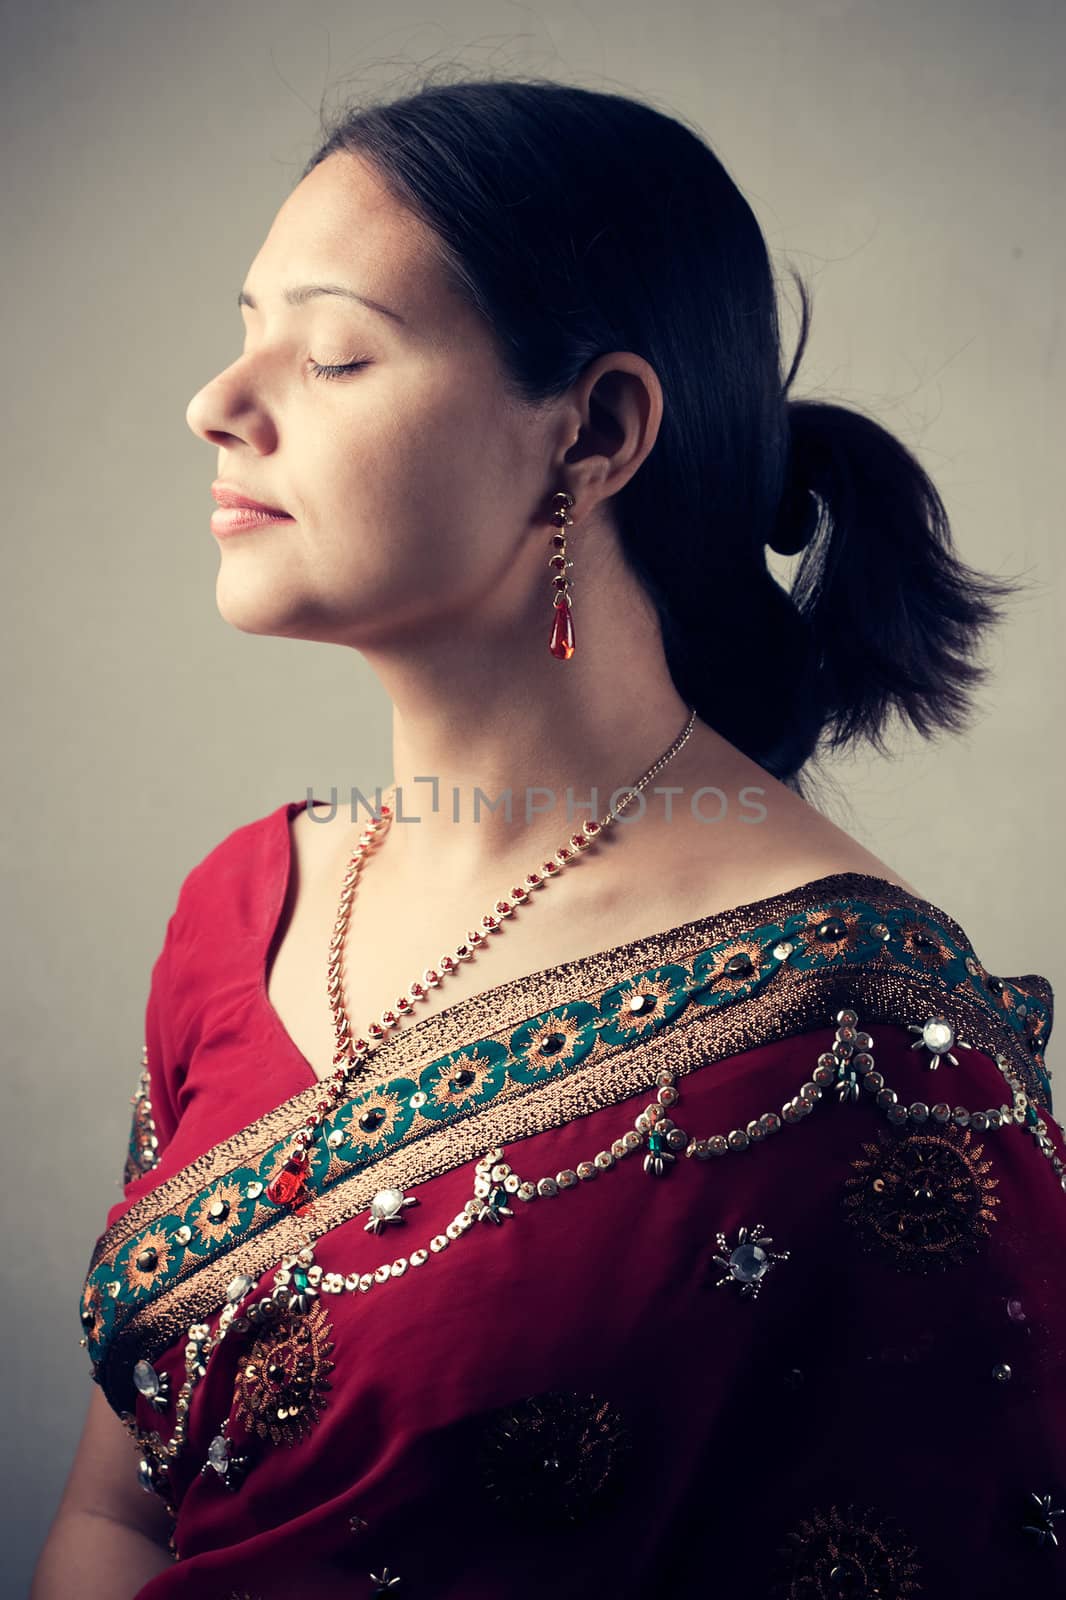 Relaxed Indian woman by ziprashantzi